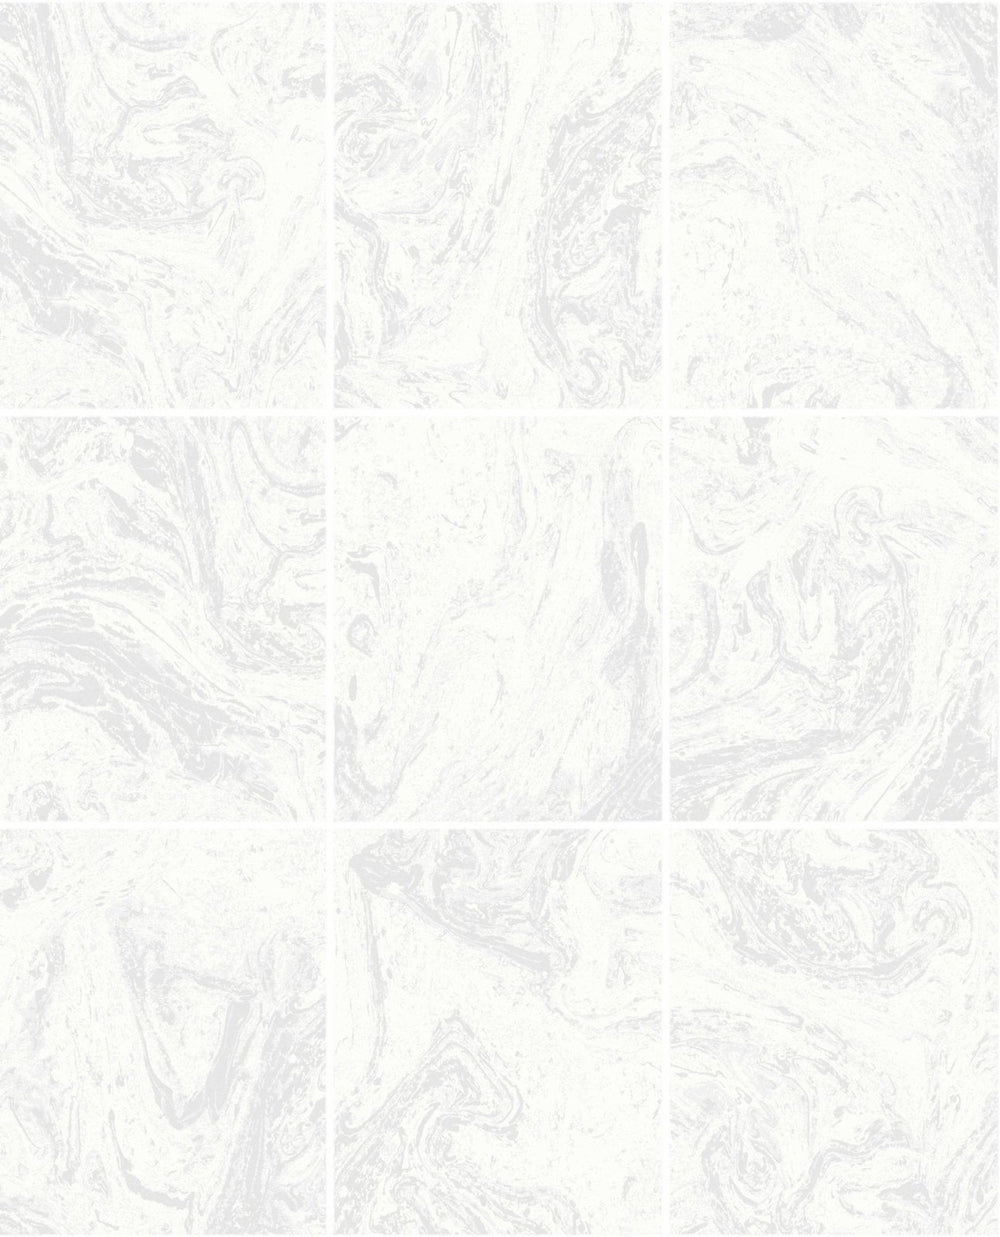 104881-Graham & Brown-Contour - Glitter Marble Tile Wallpaper-Decor Warehouse